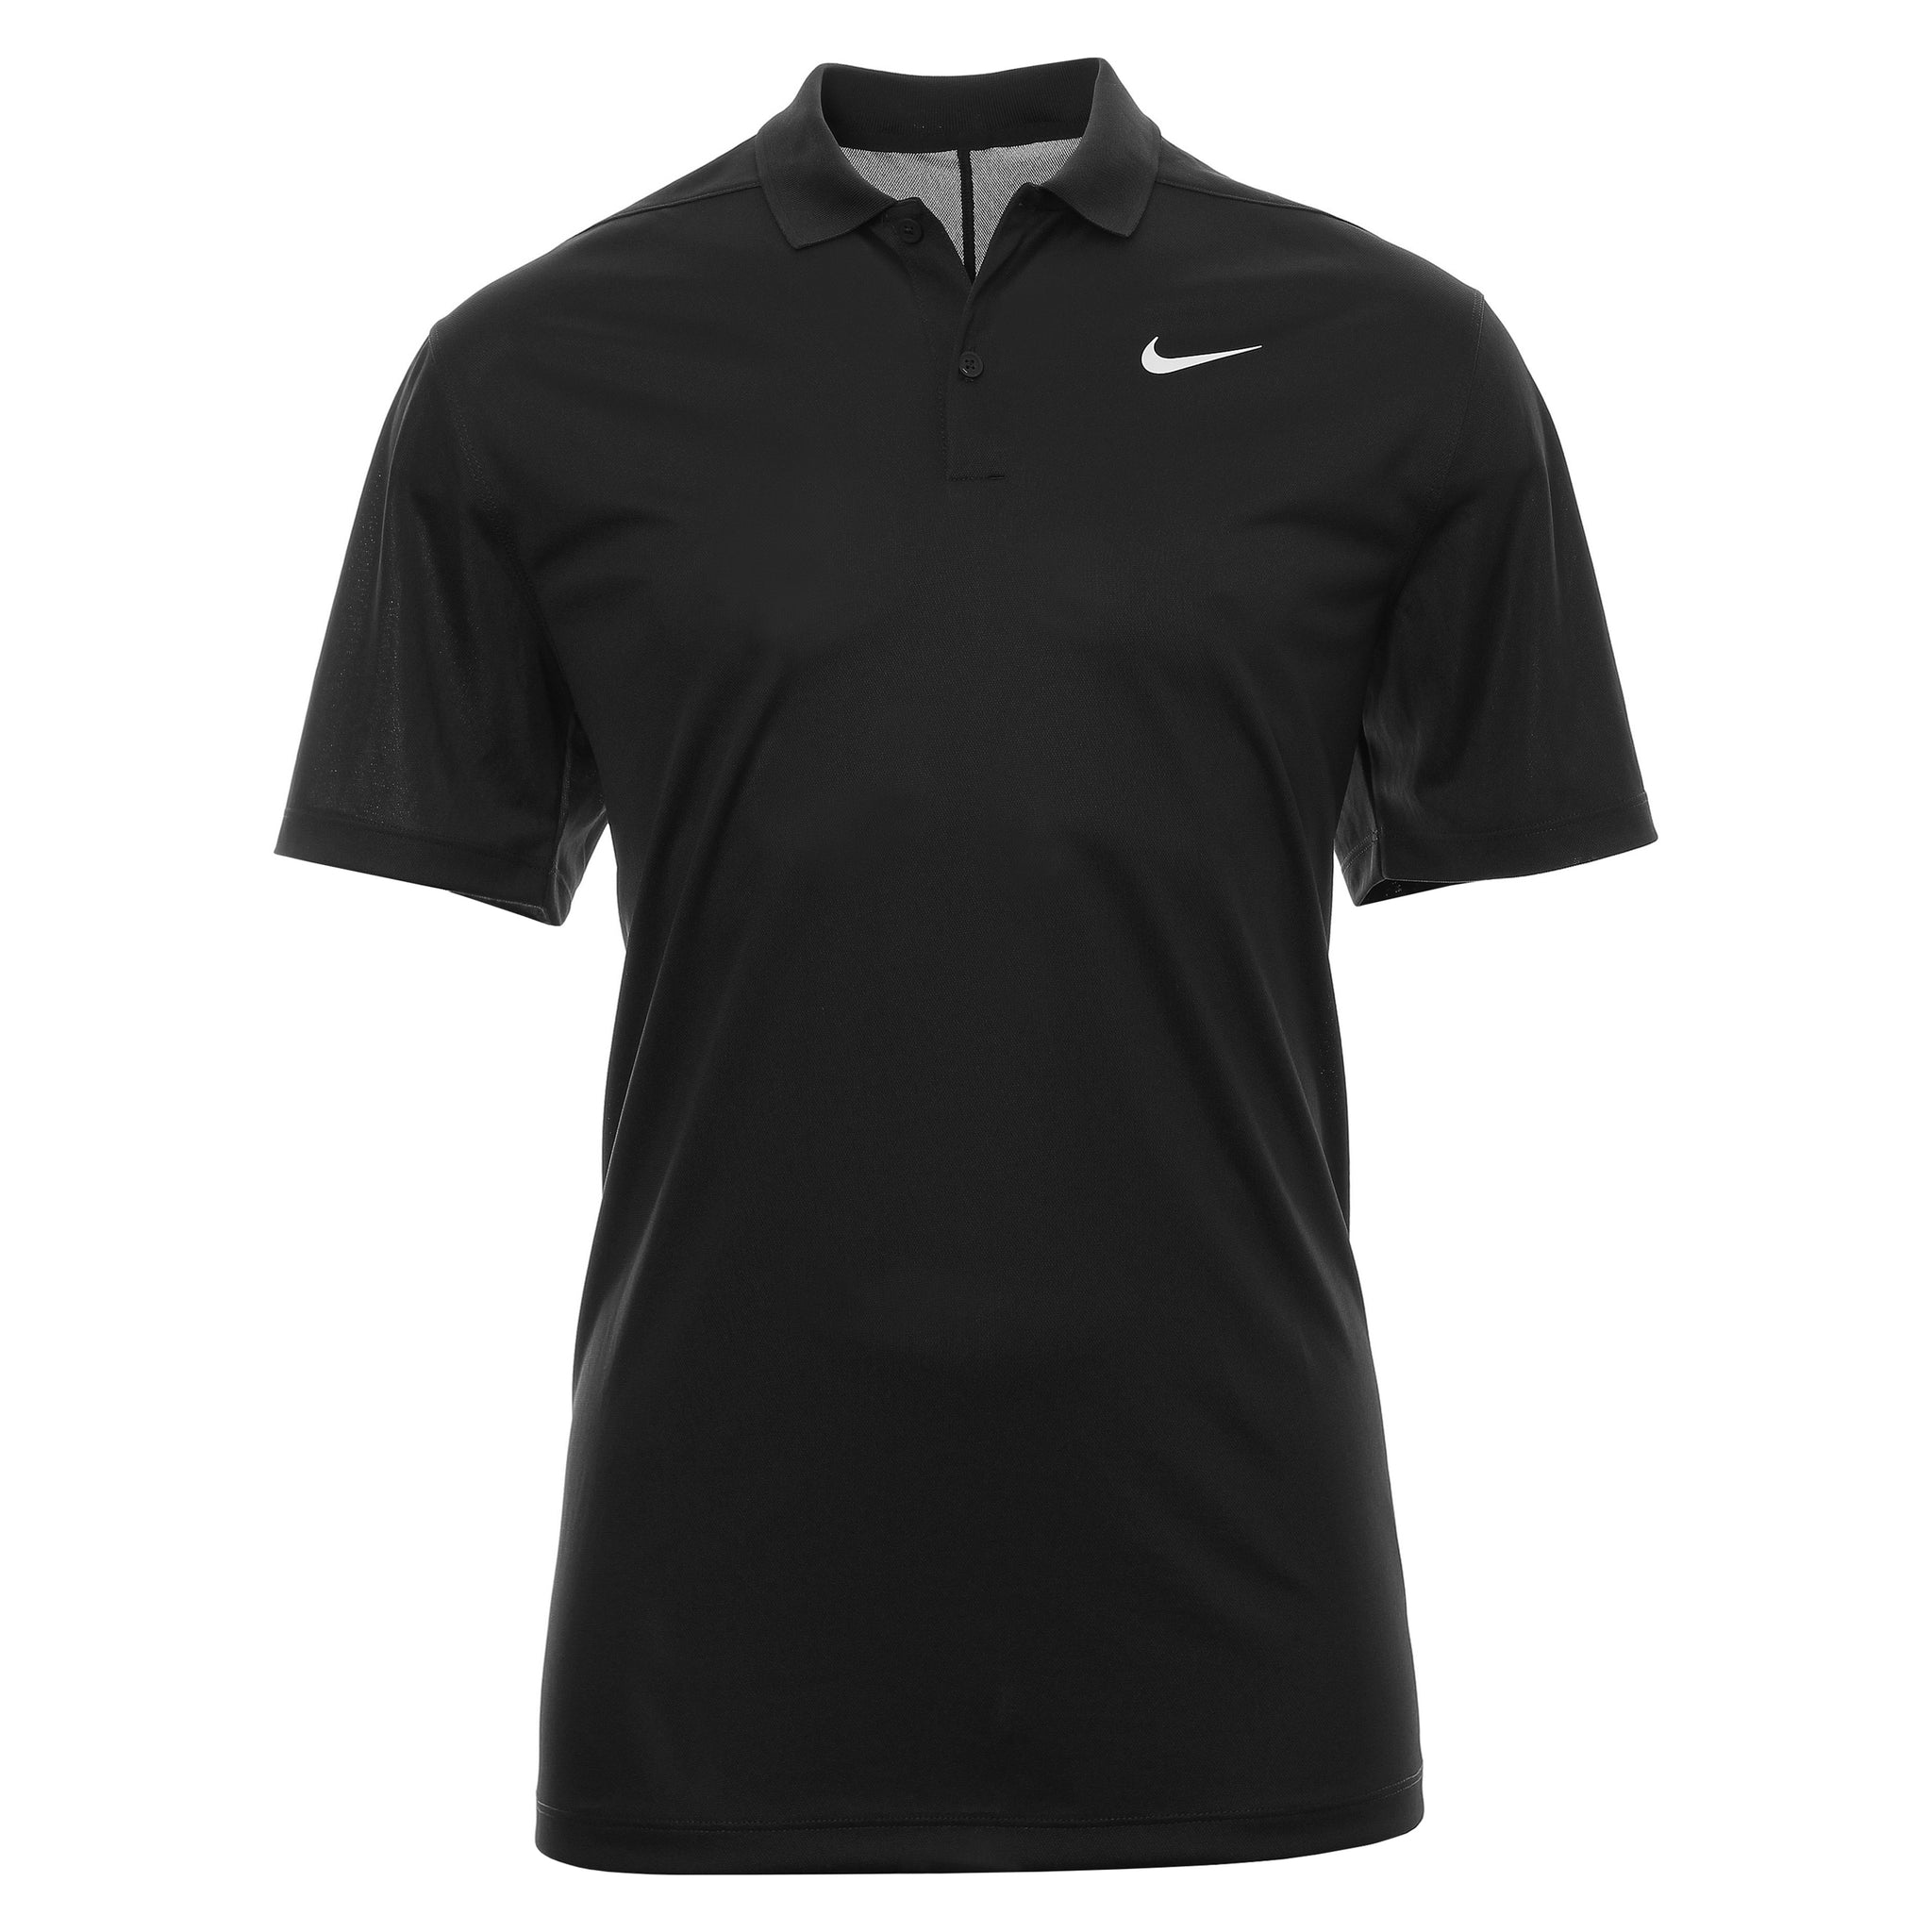 nike-golf-dri-fit-victory-solid-shirt-dh0822-010-black